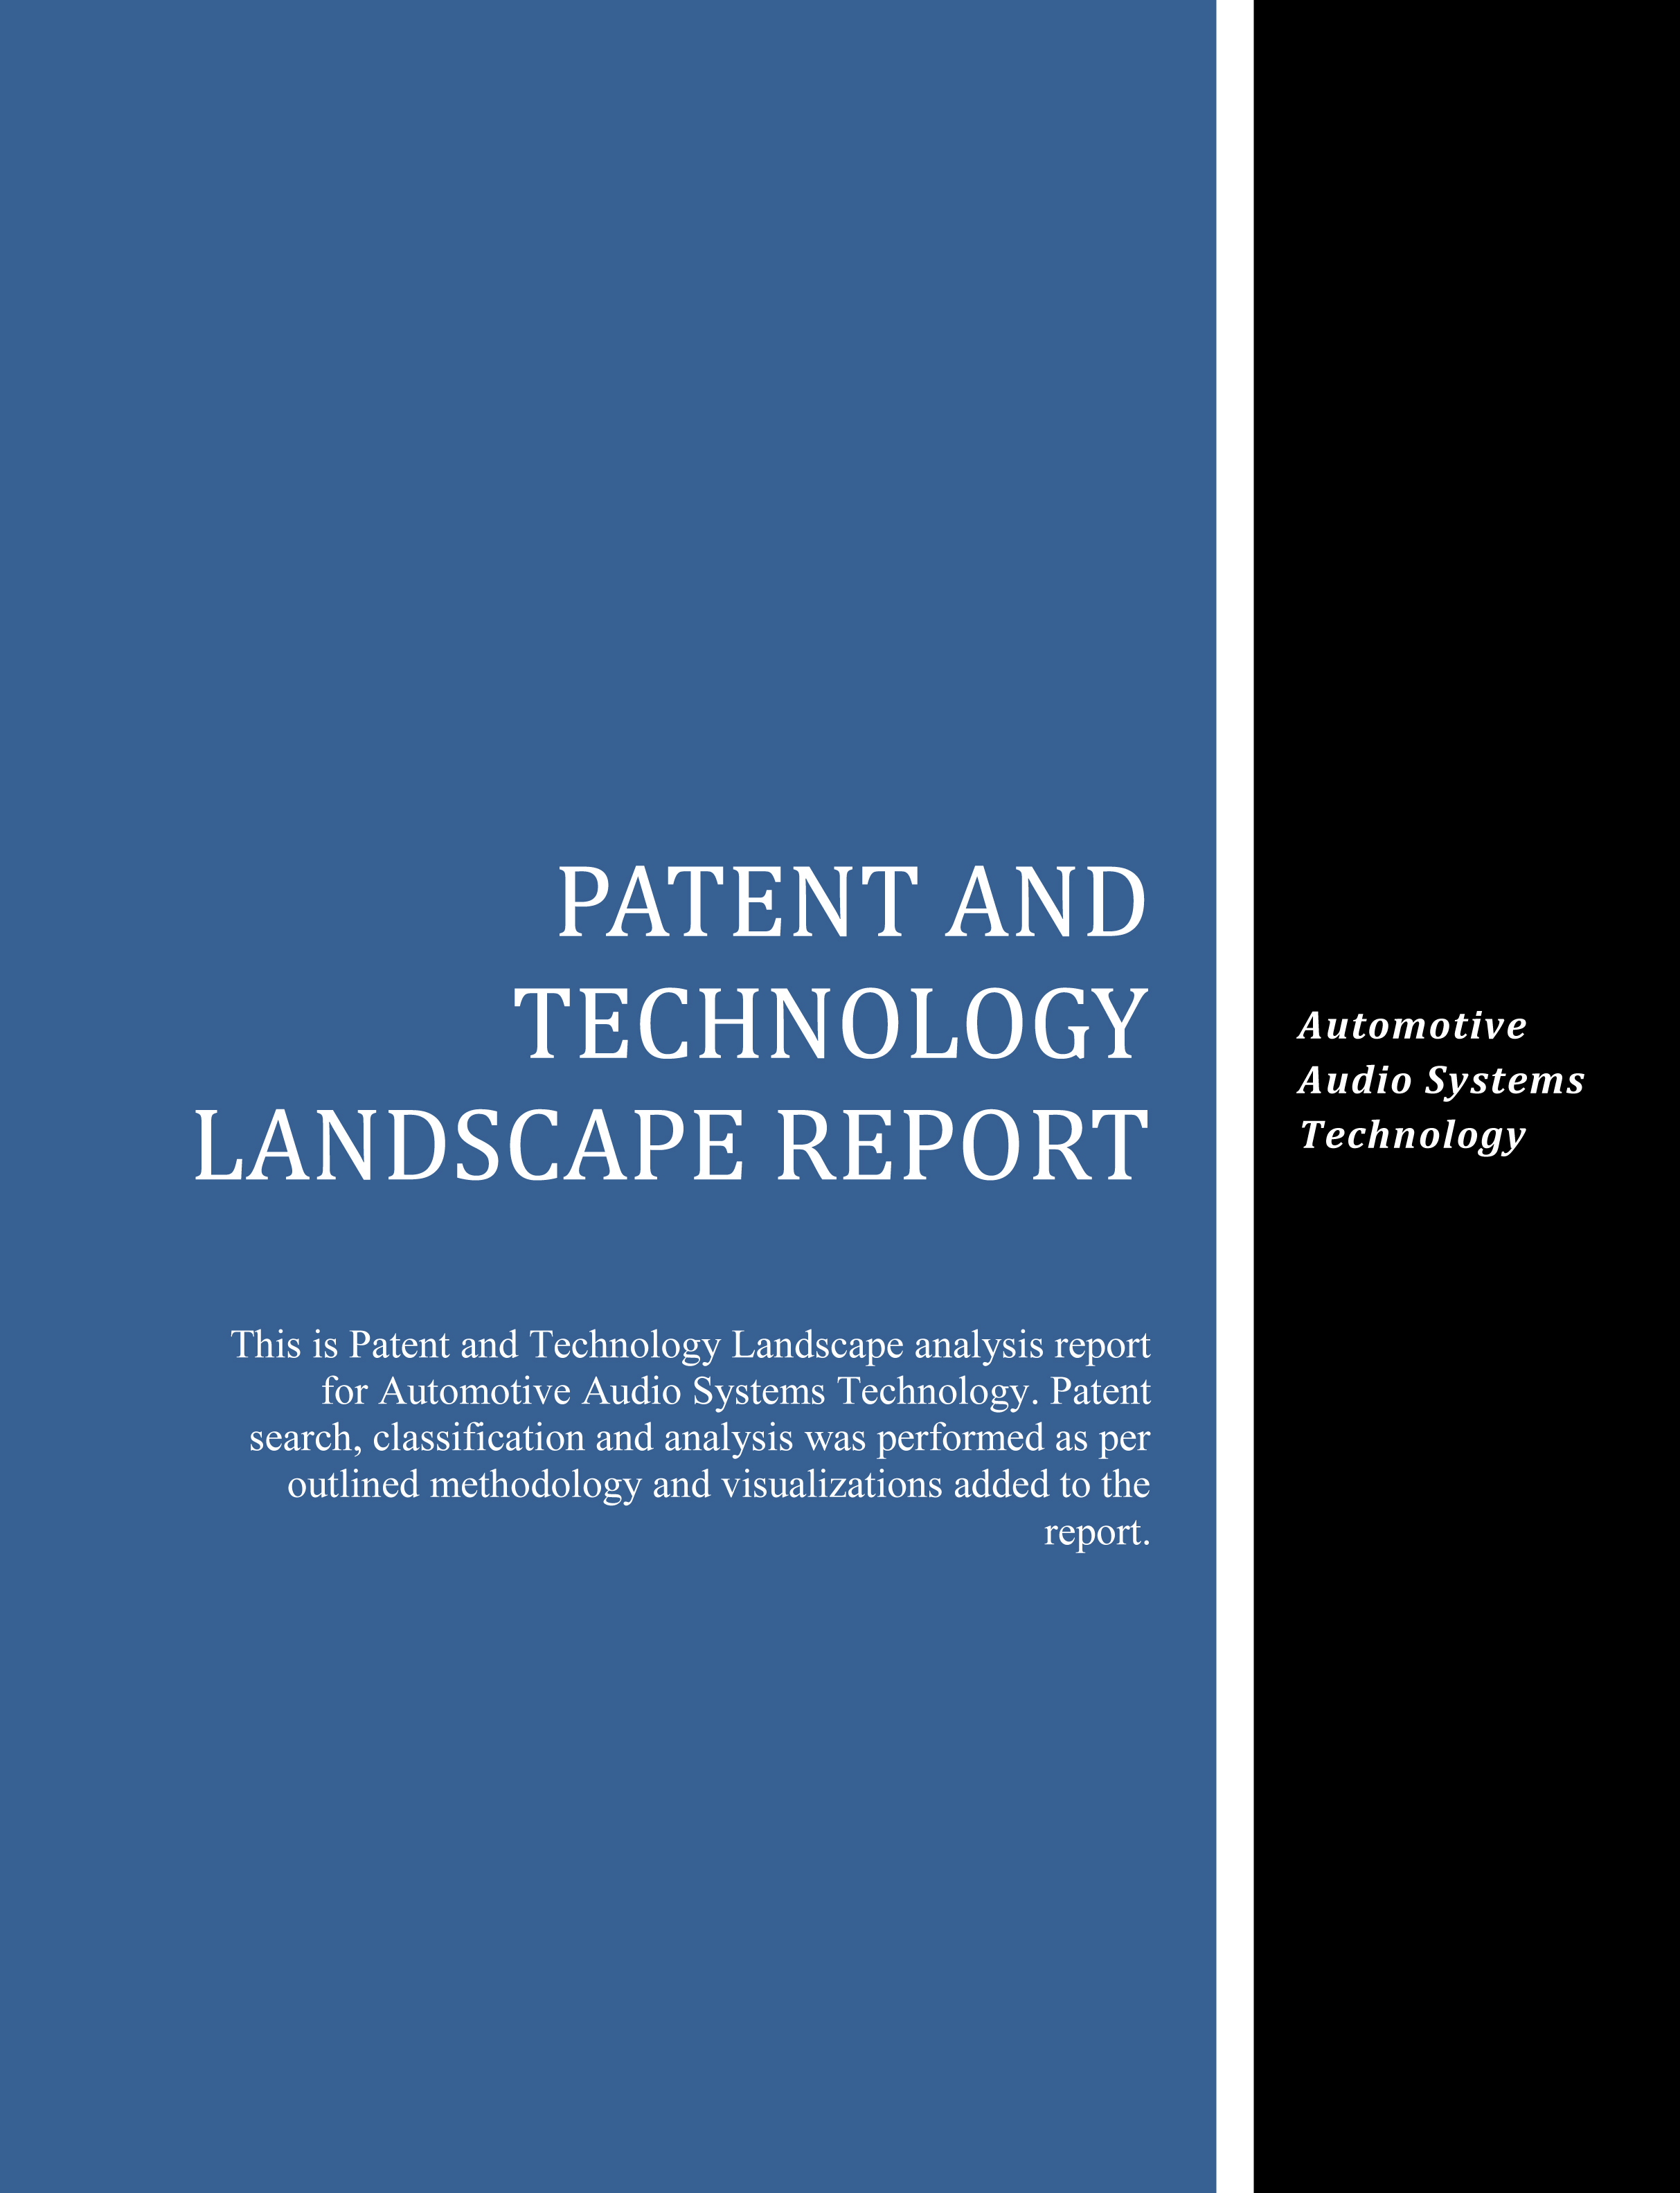 Automotive Audio Systems Technology Landscape Report